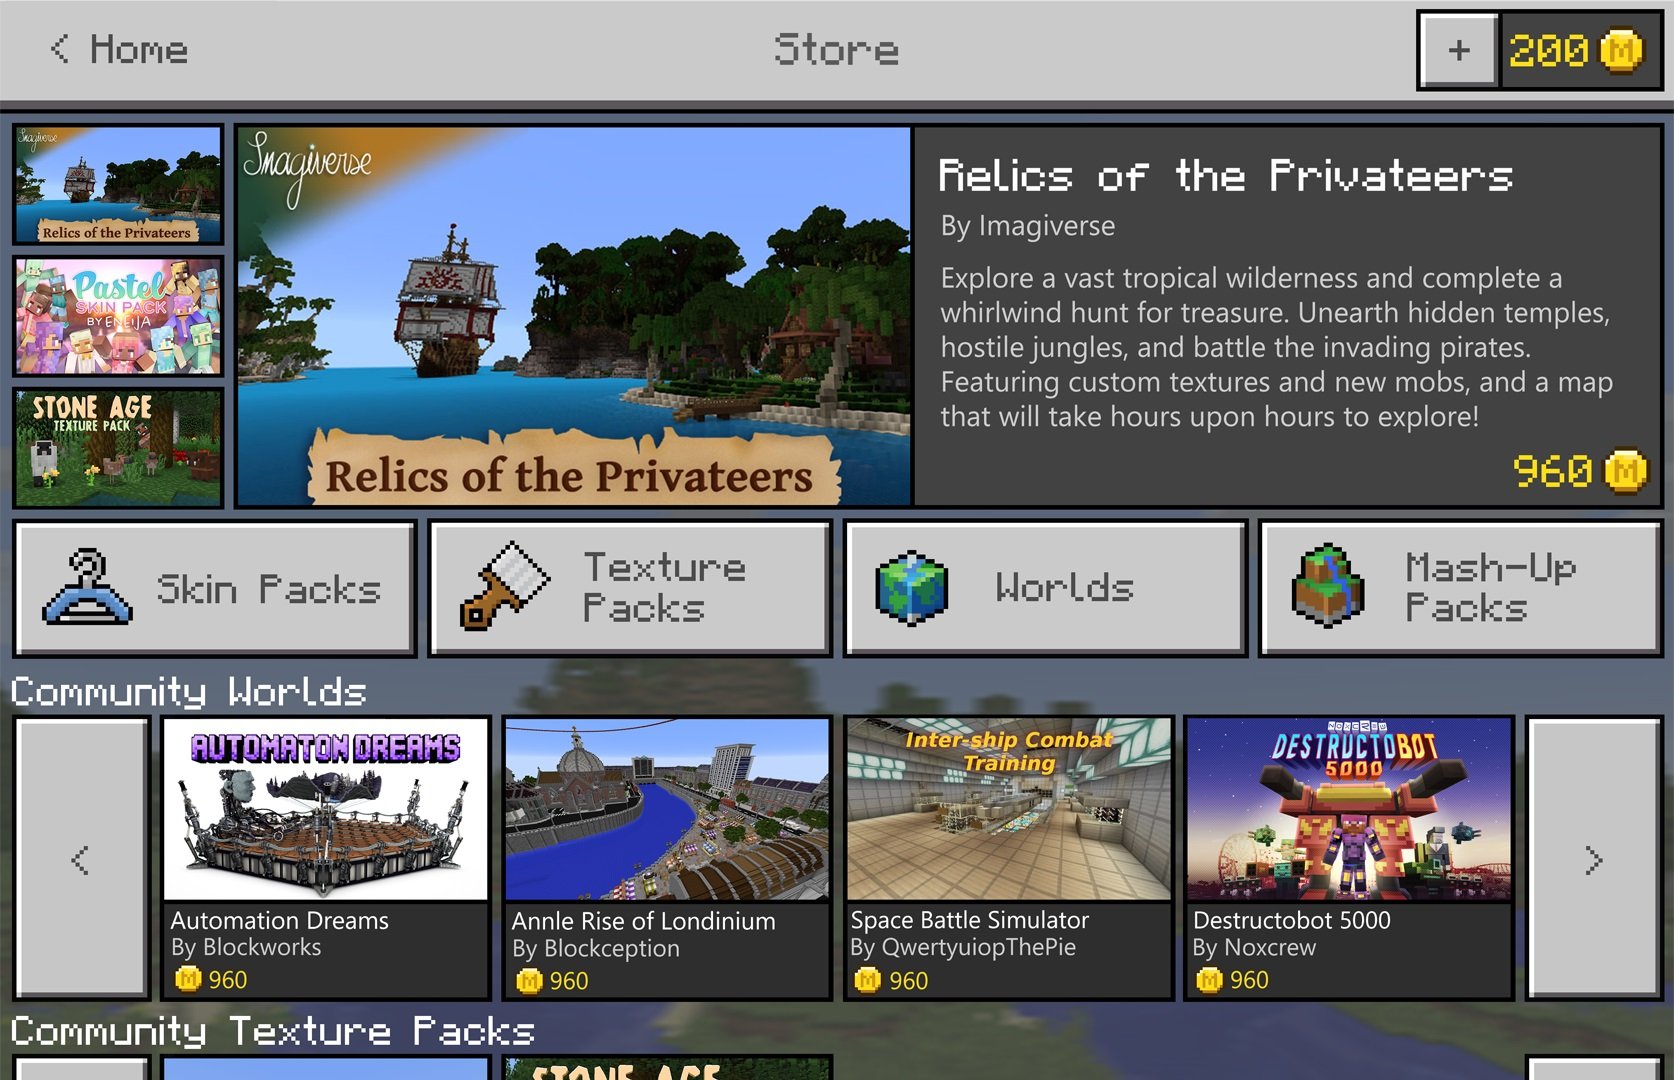 Minecraft Marketplace  Marketplace do Minecraft